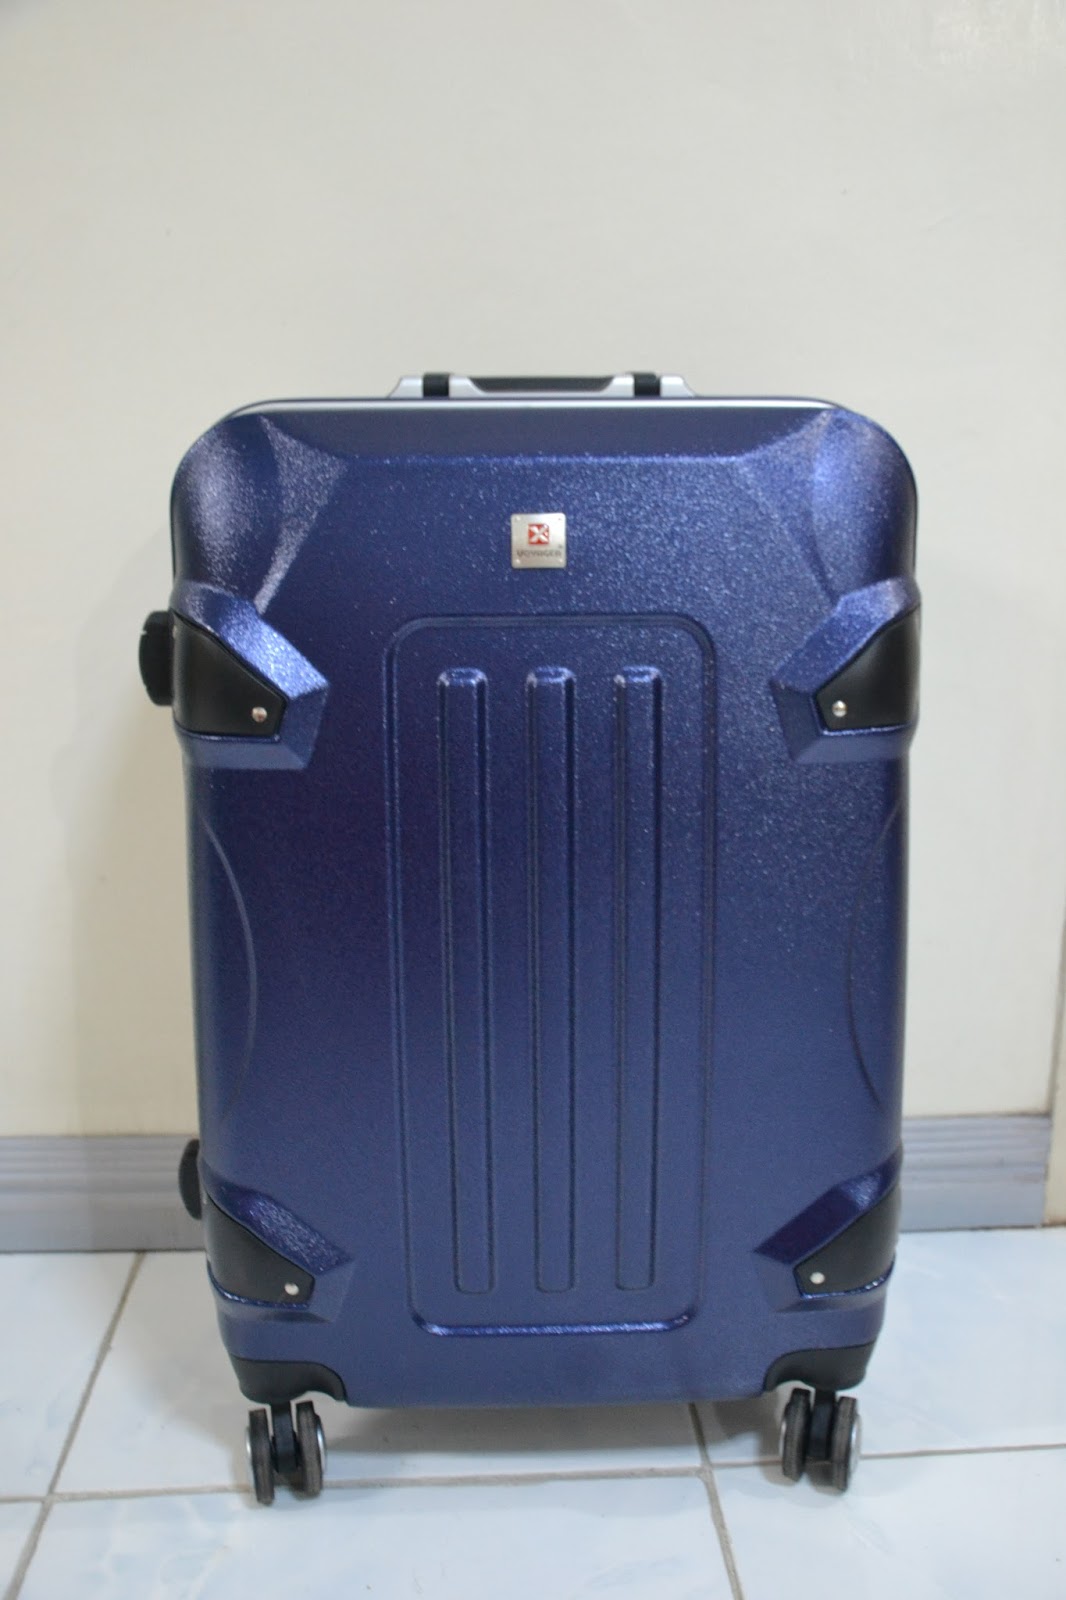 voyager luggage repair center philippines